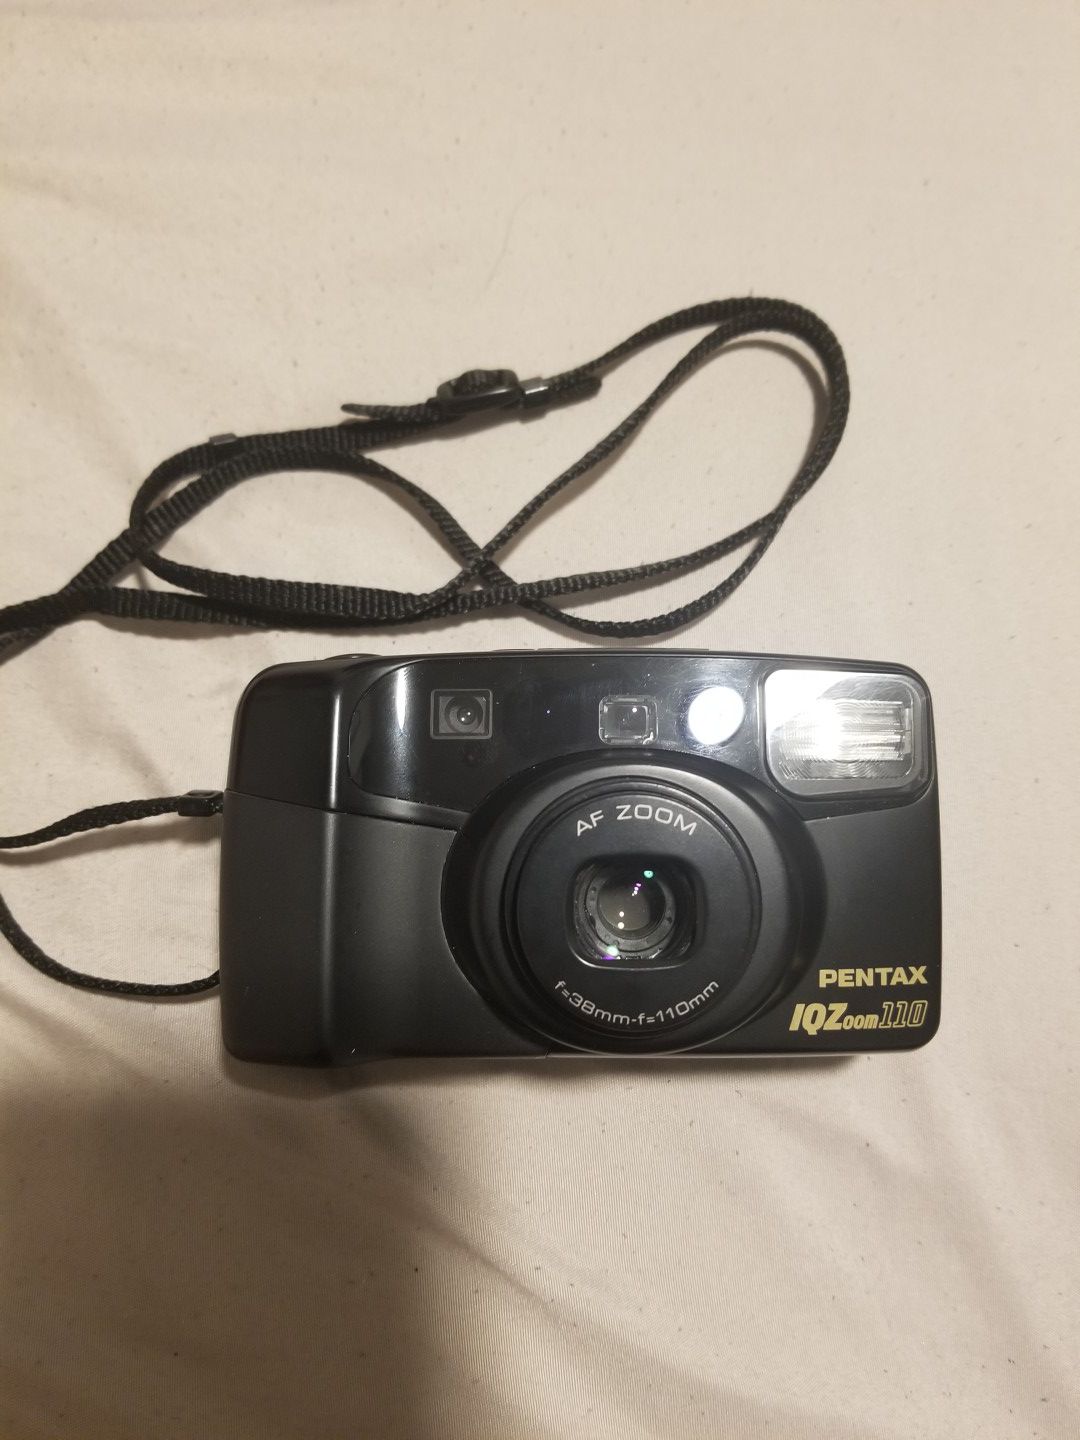 Pentax IQZoom 110 35mm film camera